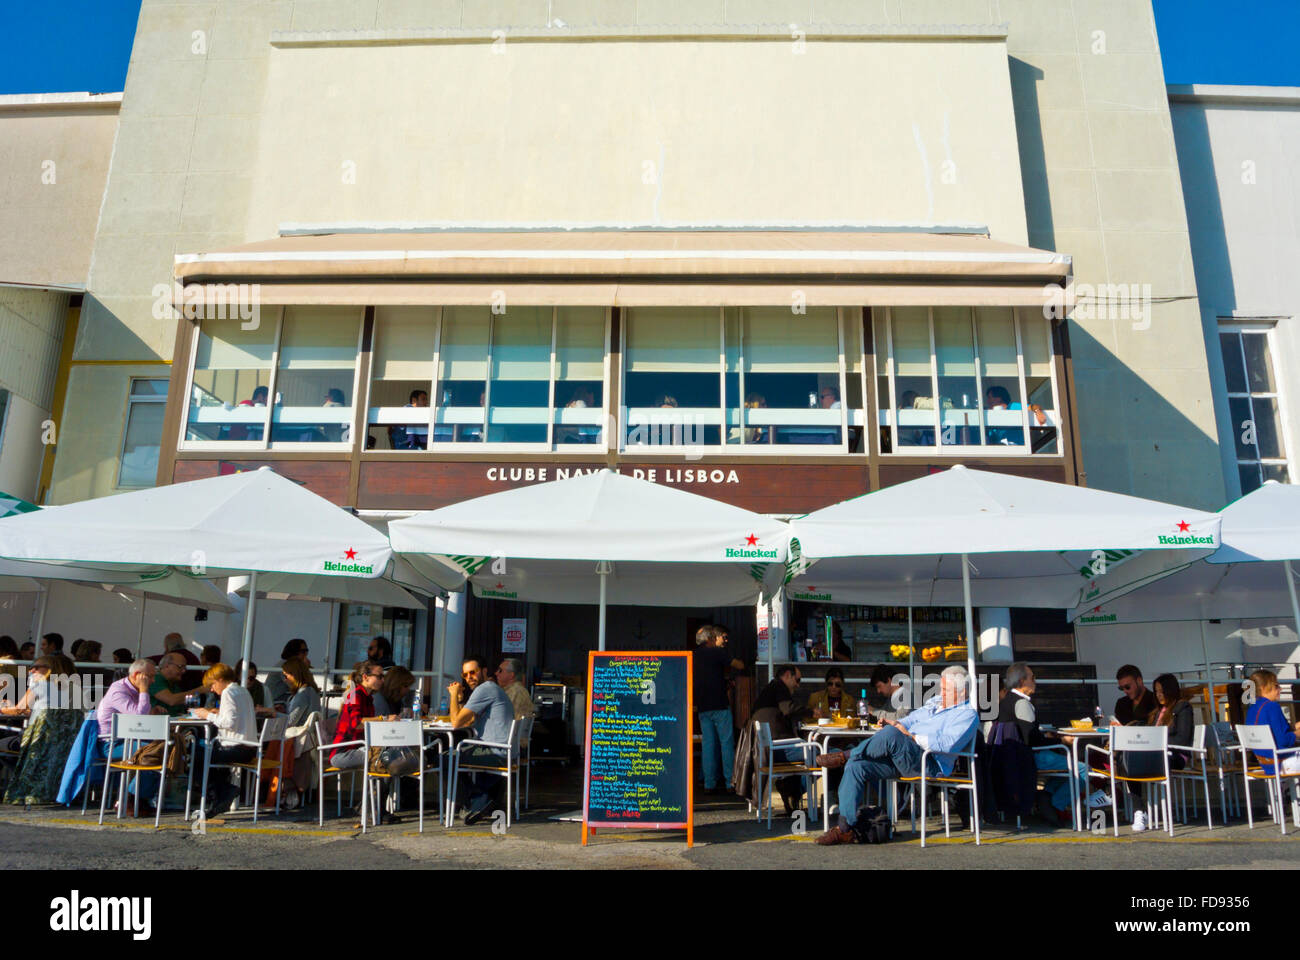 Restaurant, Clube Naval de Lisboa, naval club, riverside promenade, Belem, Lisbon, Portugal Stock Photo